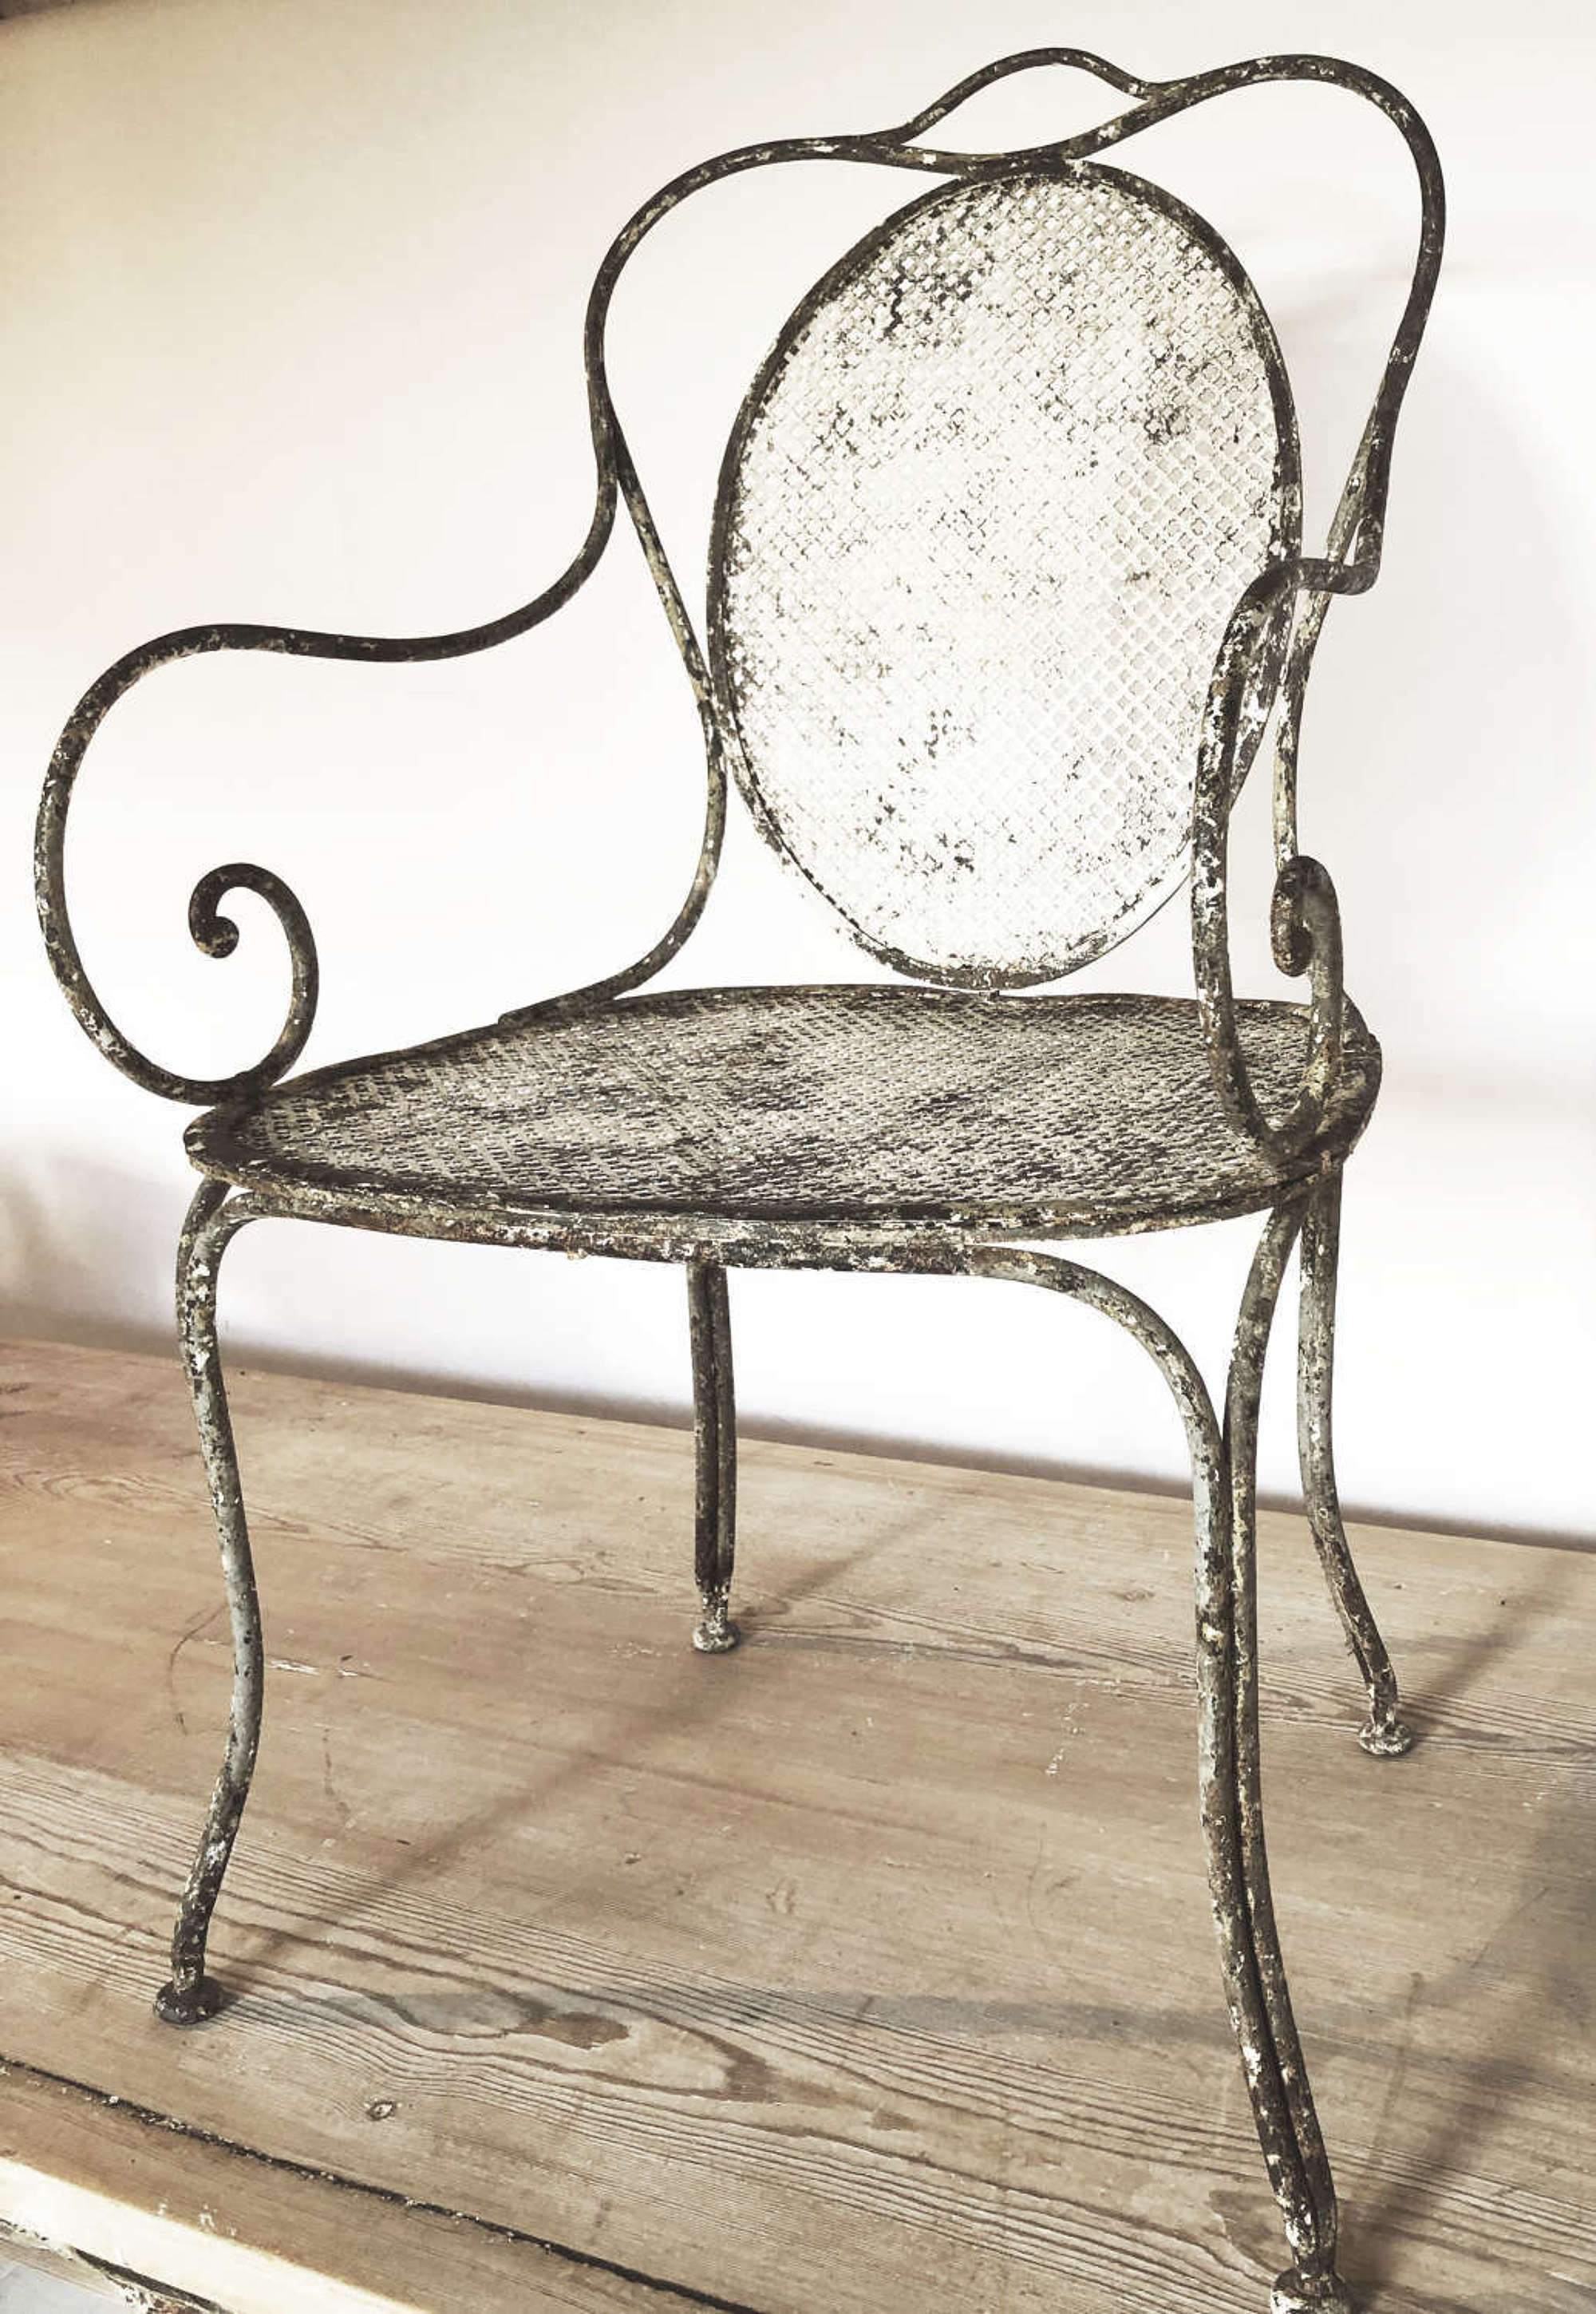 Late 19th c single French Iron Chair - circa 1890